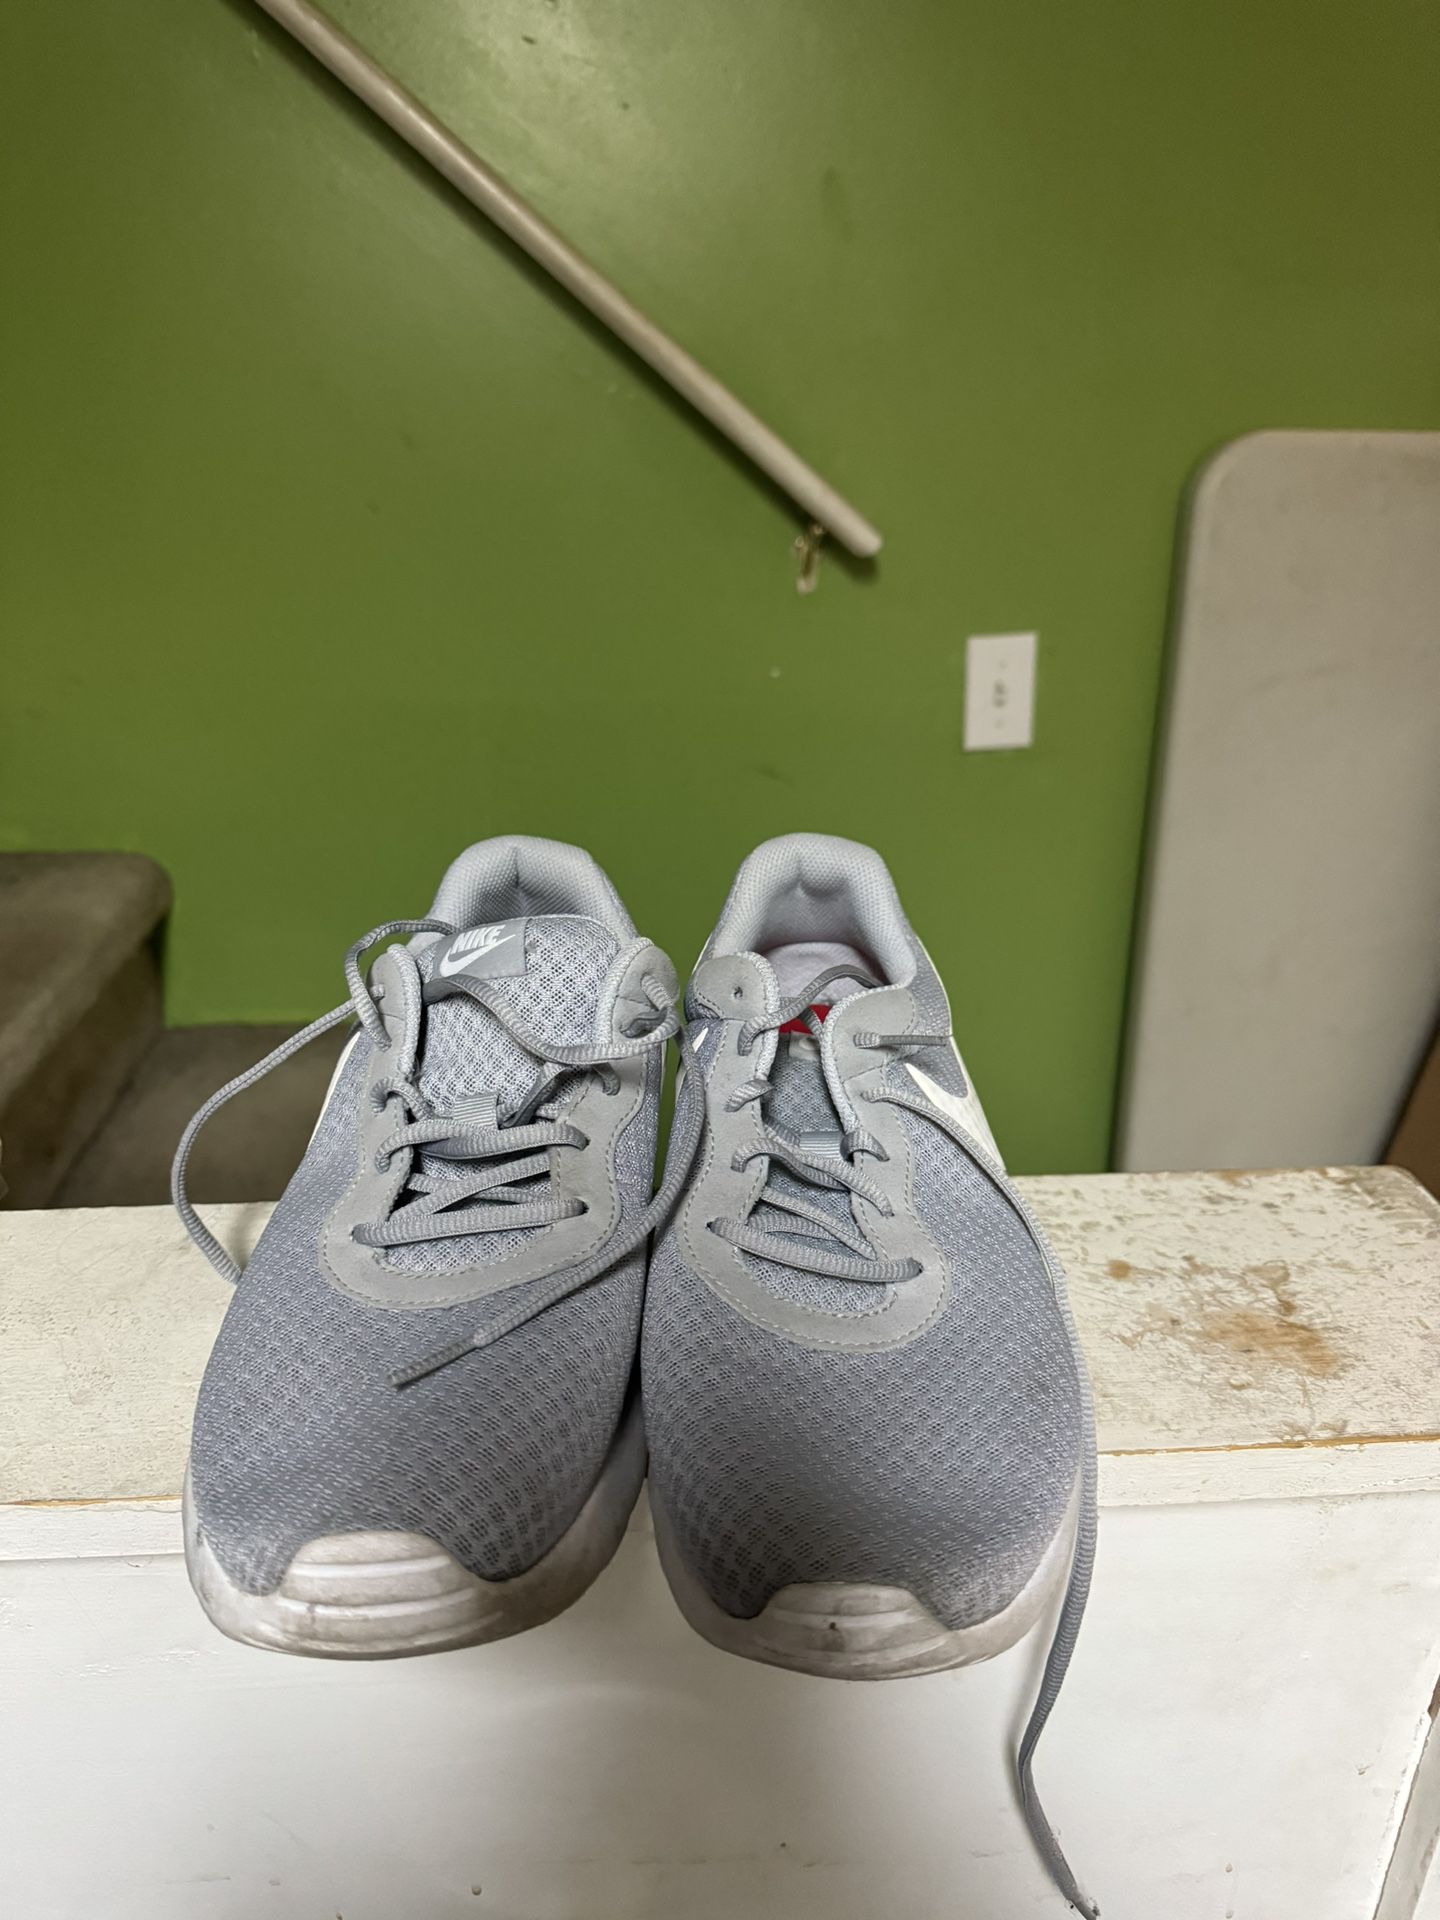 Nike Men’s Size 11 Gym Shoes